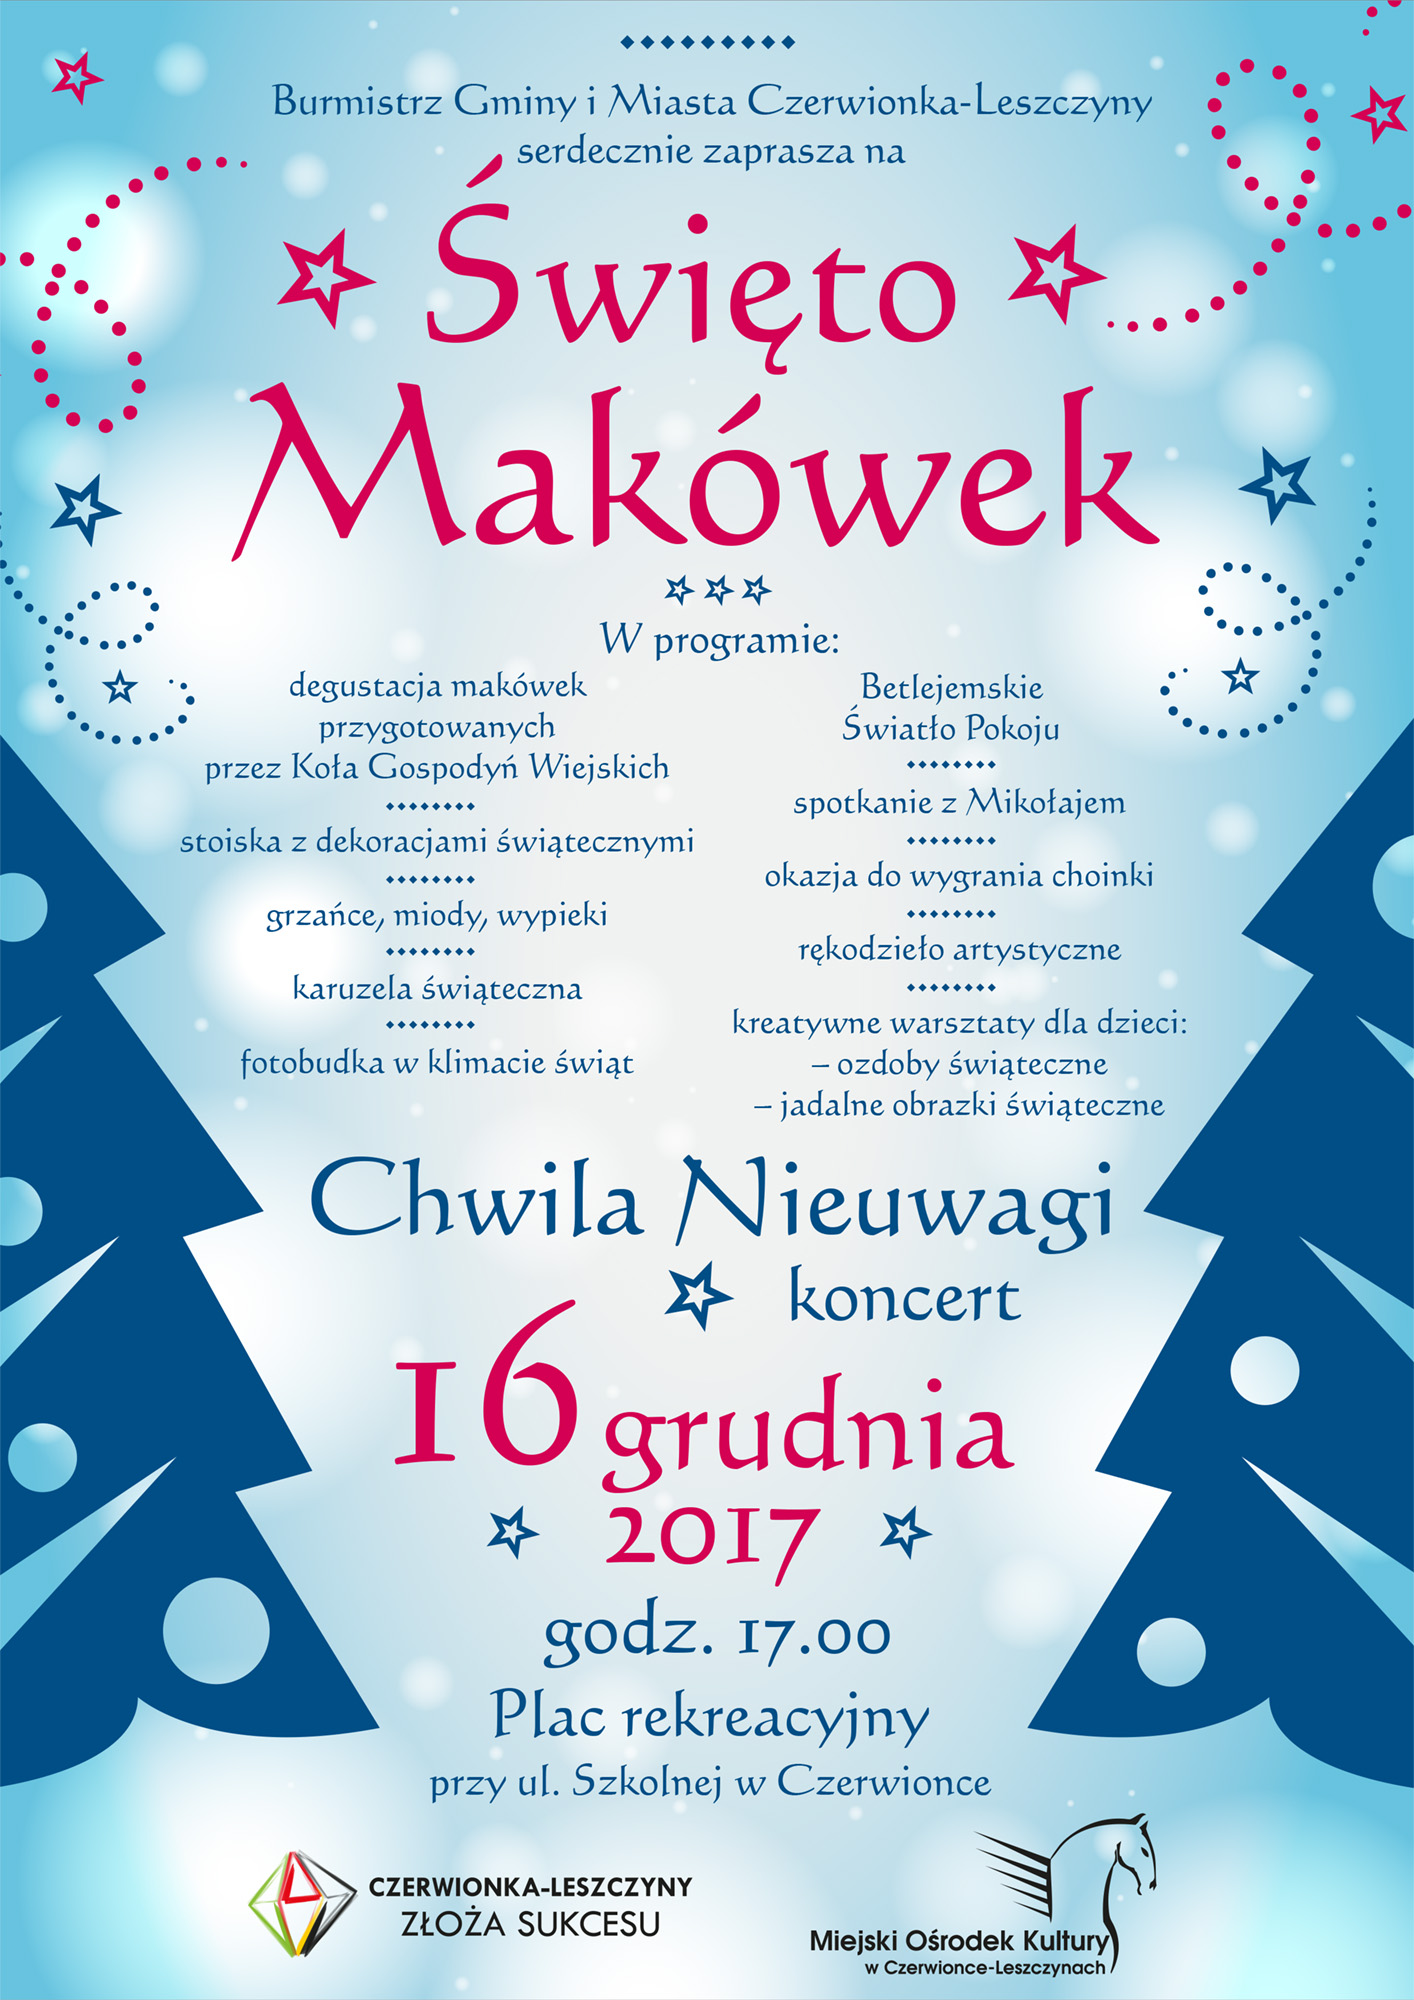 wito Makówek 2017 - Palowice.NET